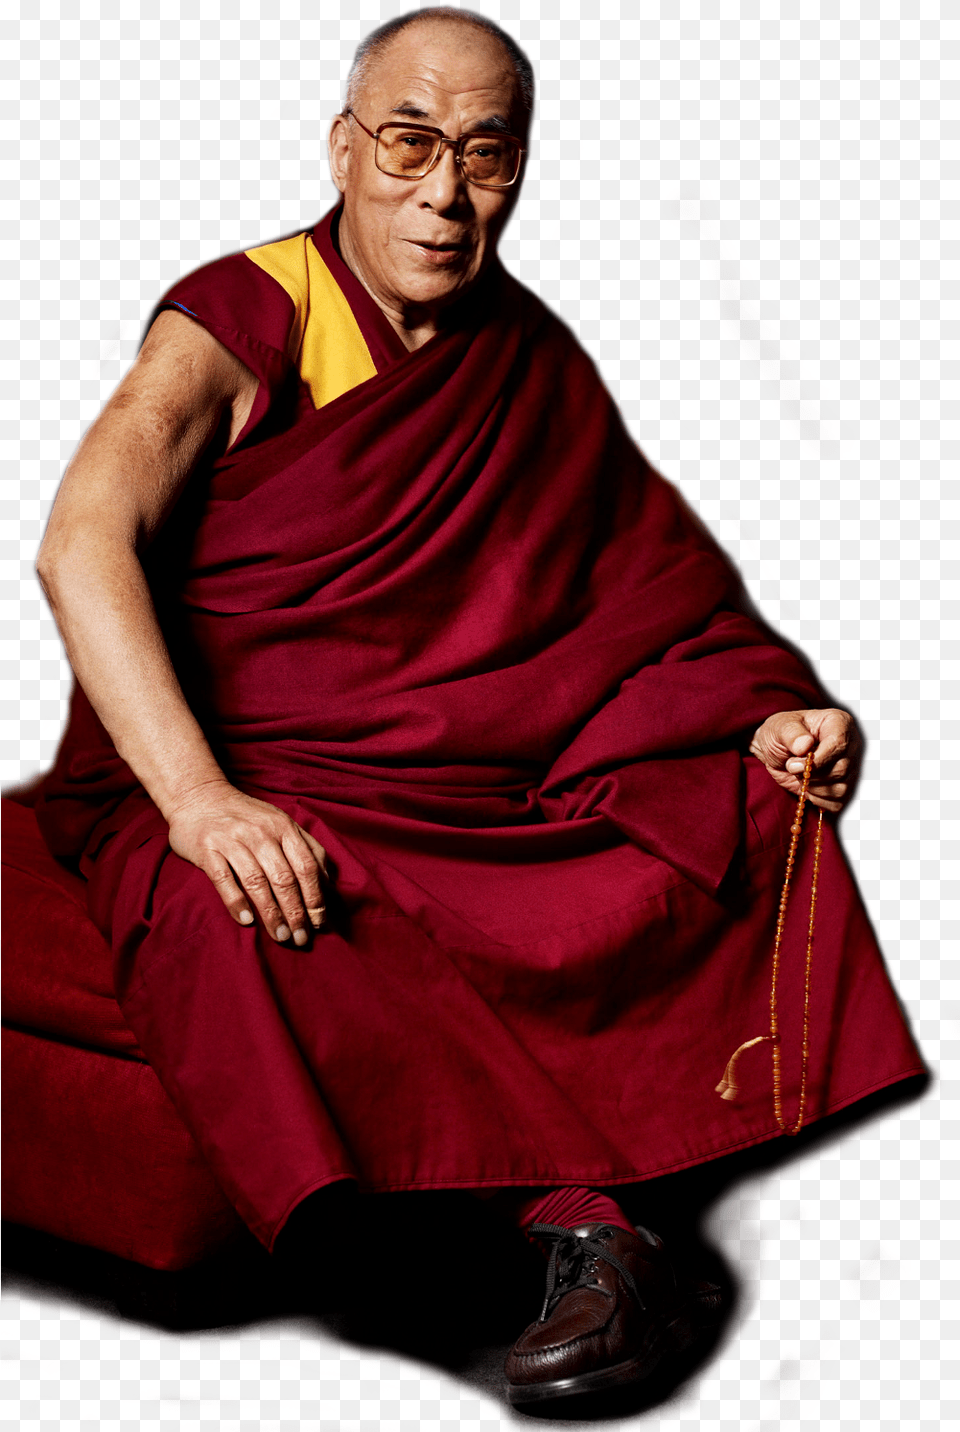 Dalai Lama Image Background 14th Dalai Lama, Adult, Person, Monk, Man Png